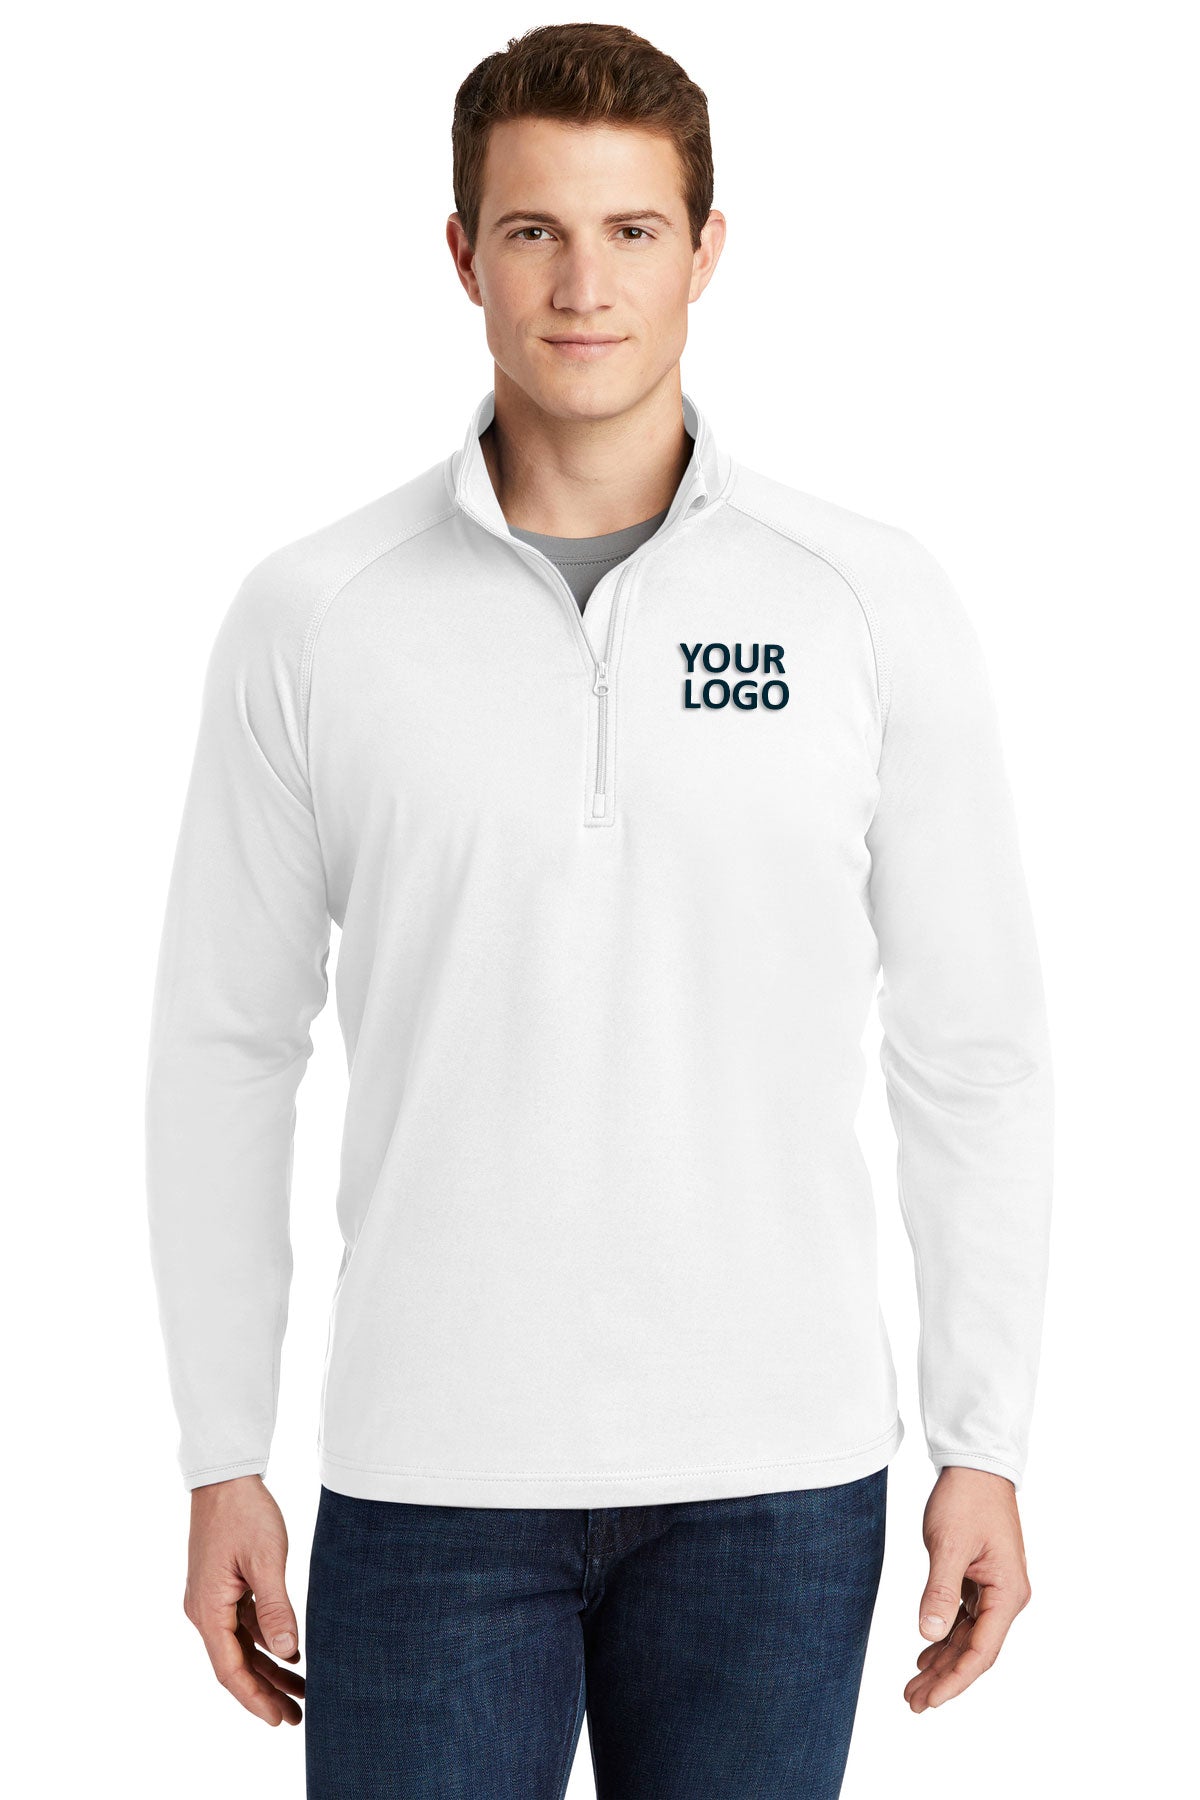 Sport-Tek White ST850 sweatshirts custom logo